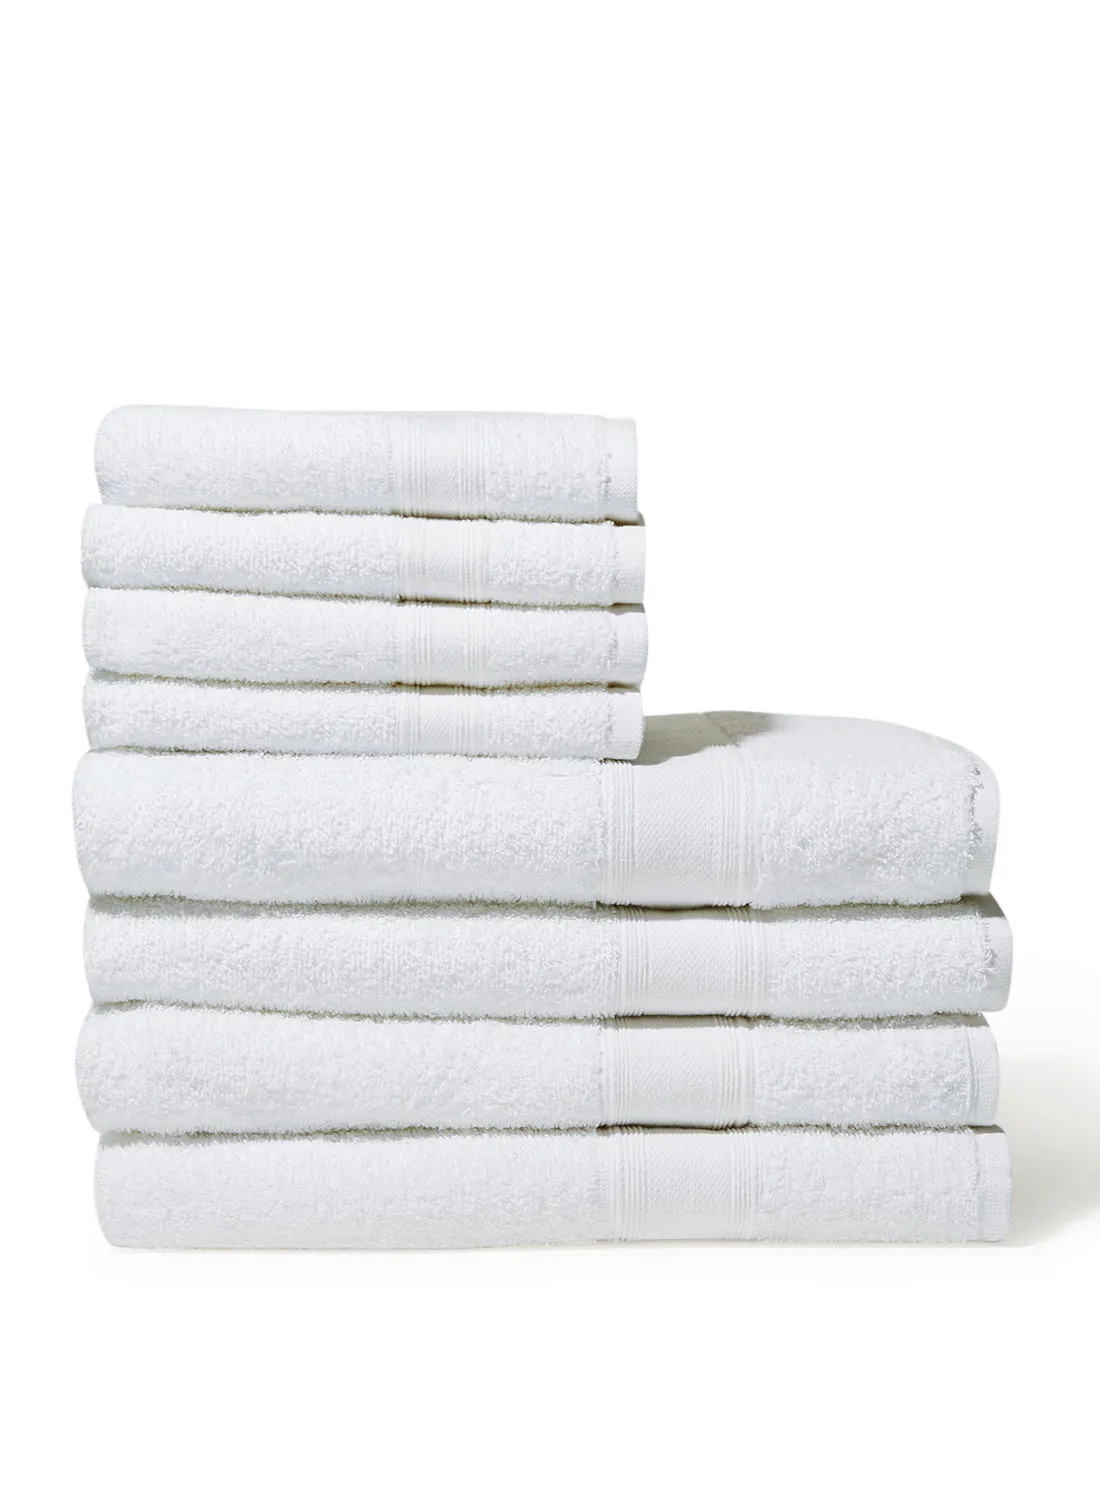 Amal 8 Piece Bathroom Towel Set - 400 GSM 100% Cotton Terry - 4 Hand Towel - 4 Bath Towel - White Color -Quick Dry - Super Absorbent